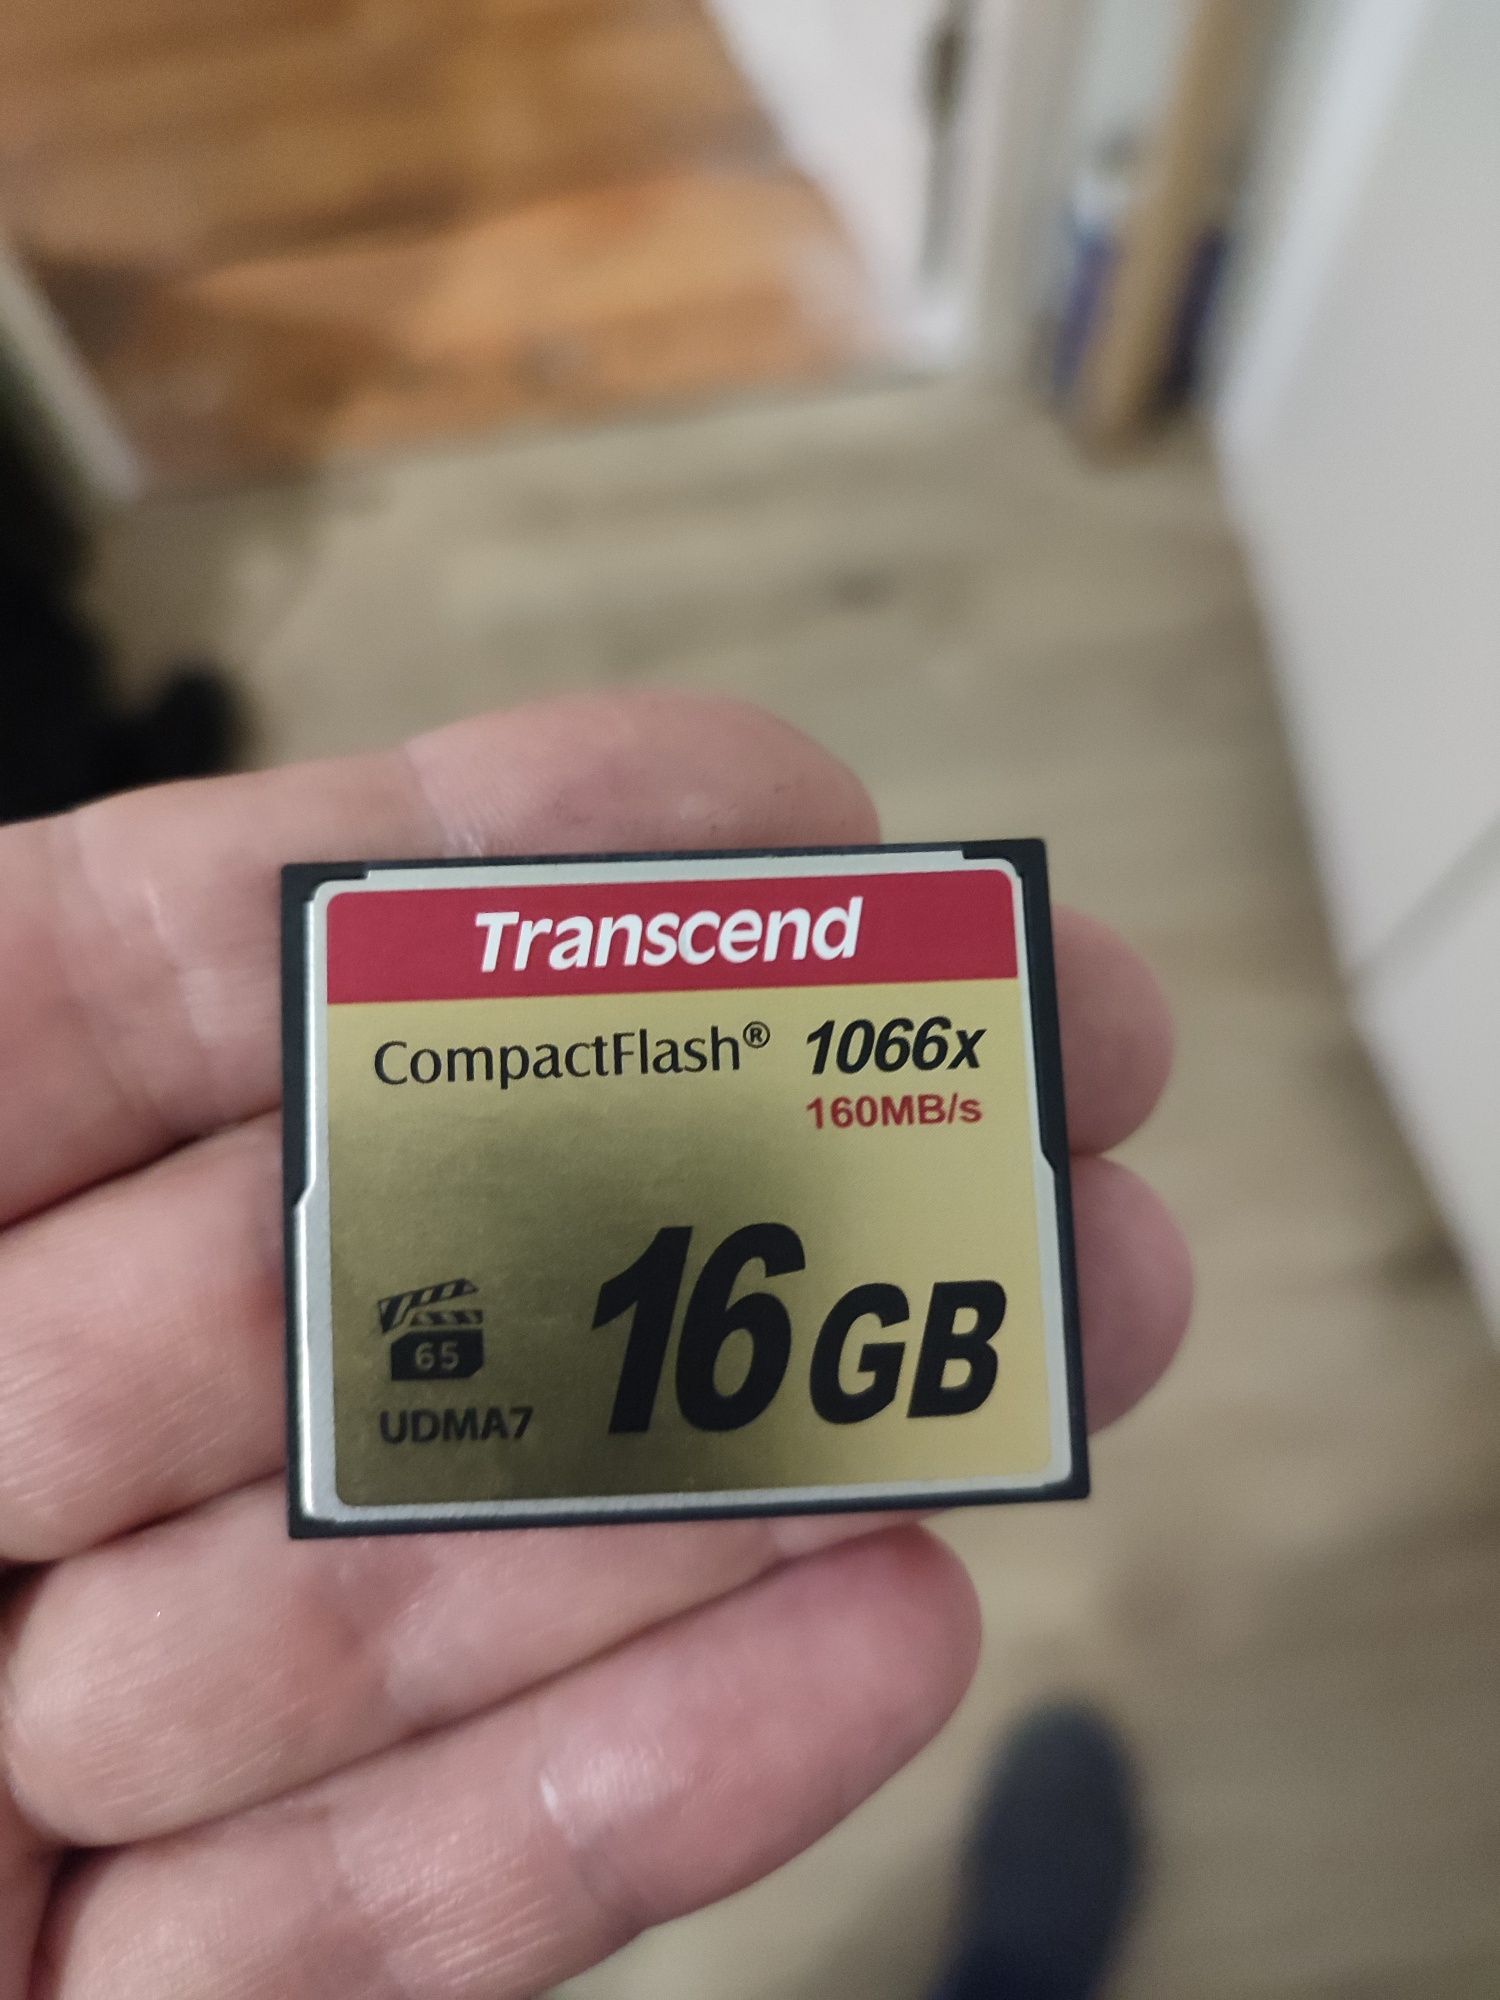 Transcend 16gb 1066x compact flash